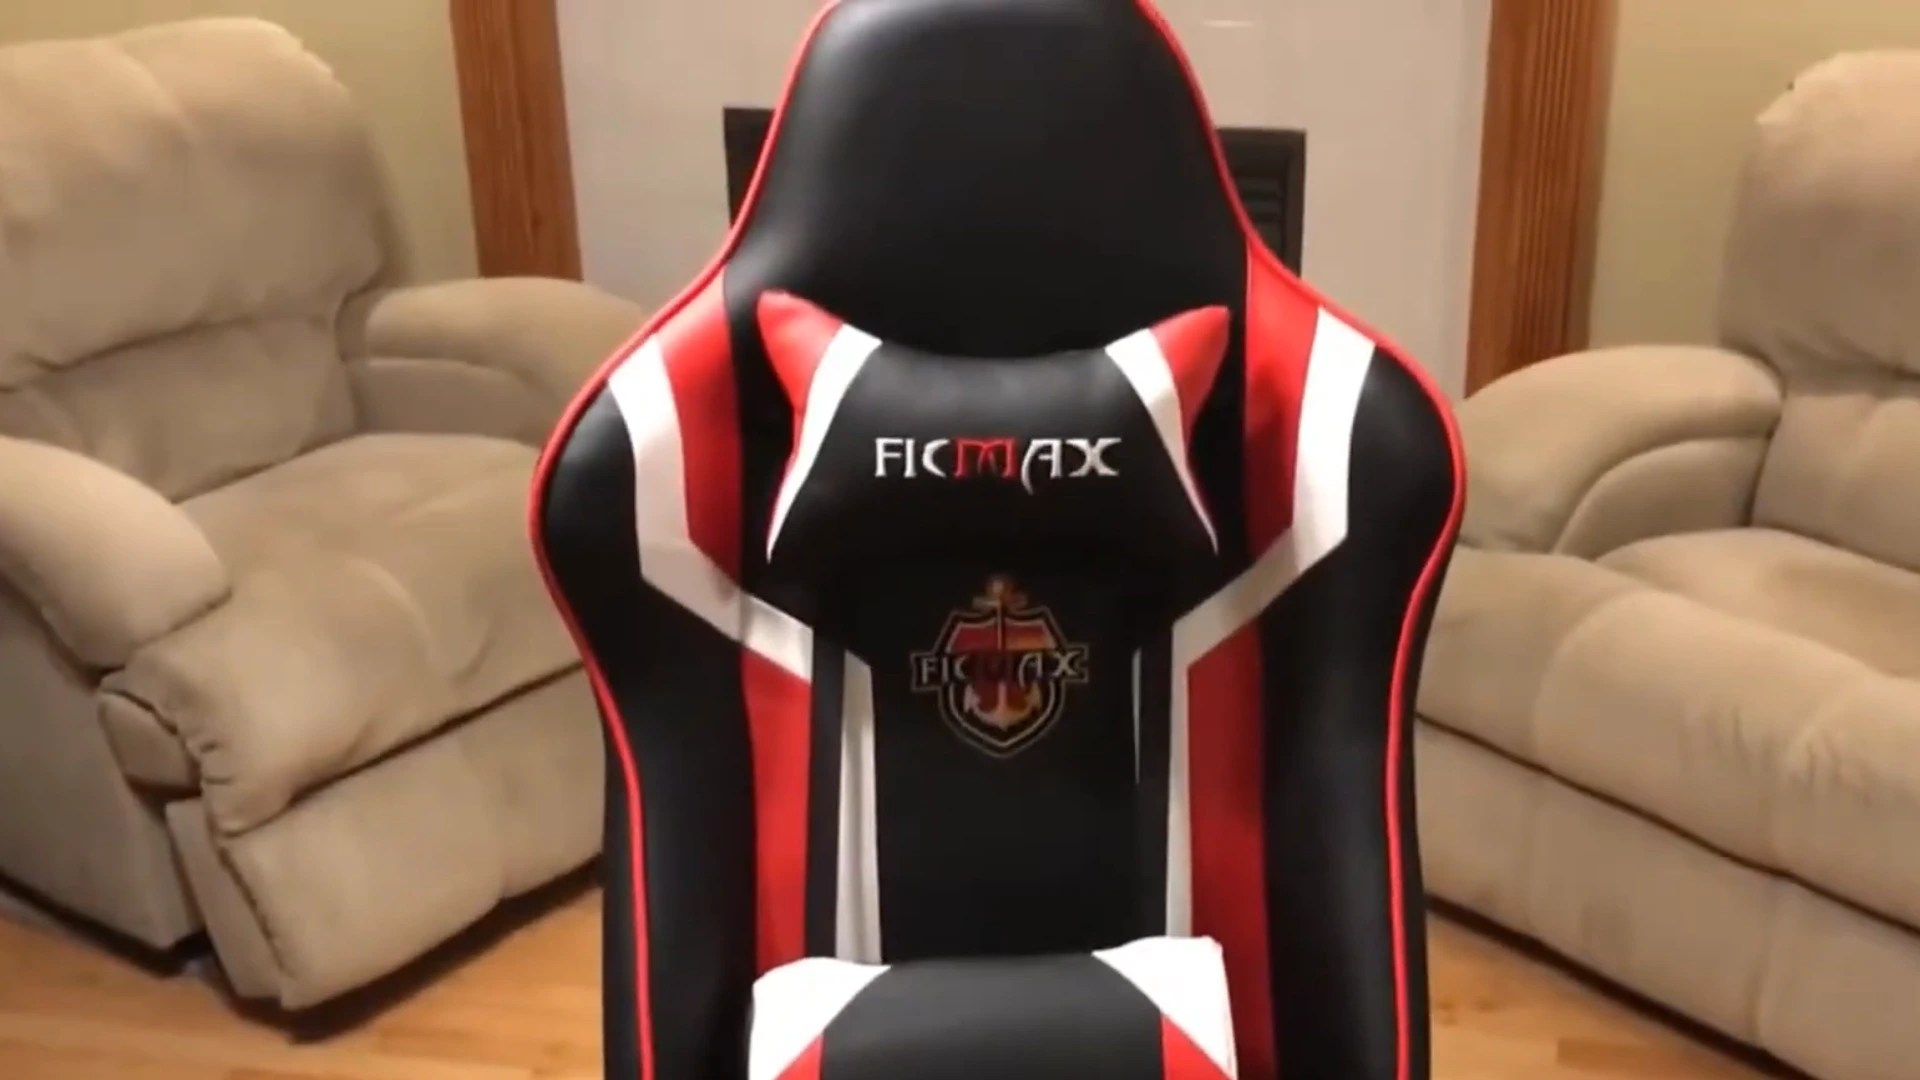 Ficmax Gaming Chair Headrest